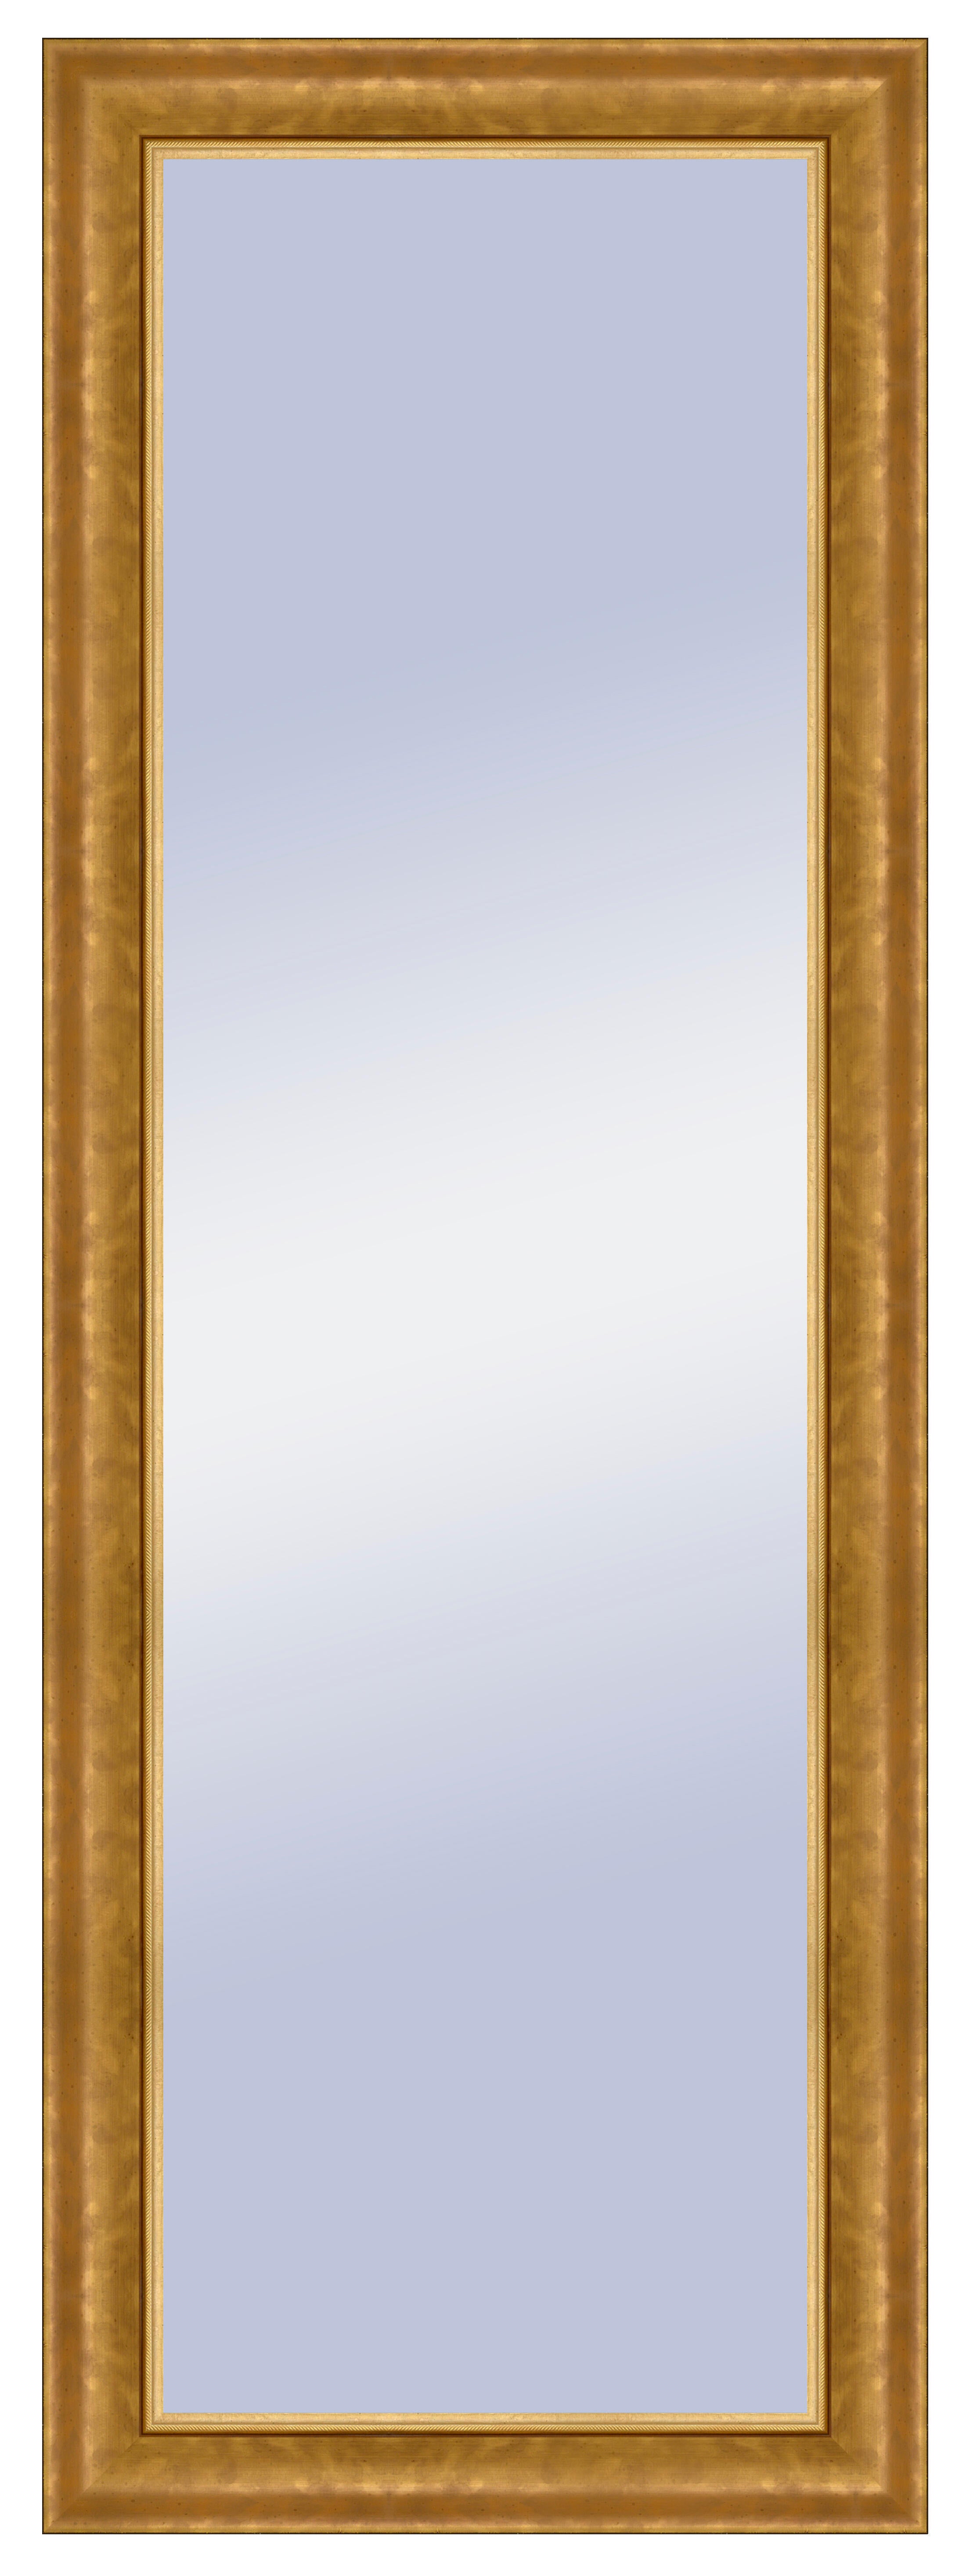 Espejo enmarcado rectangular adele dorado 155 x 55 cm